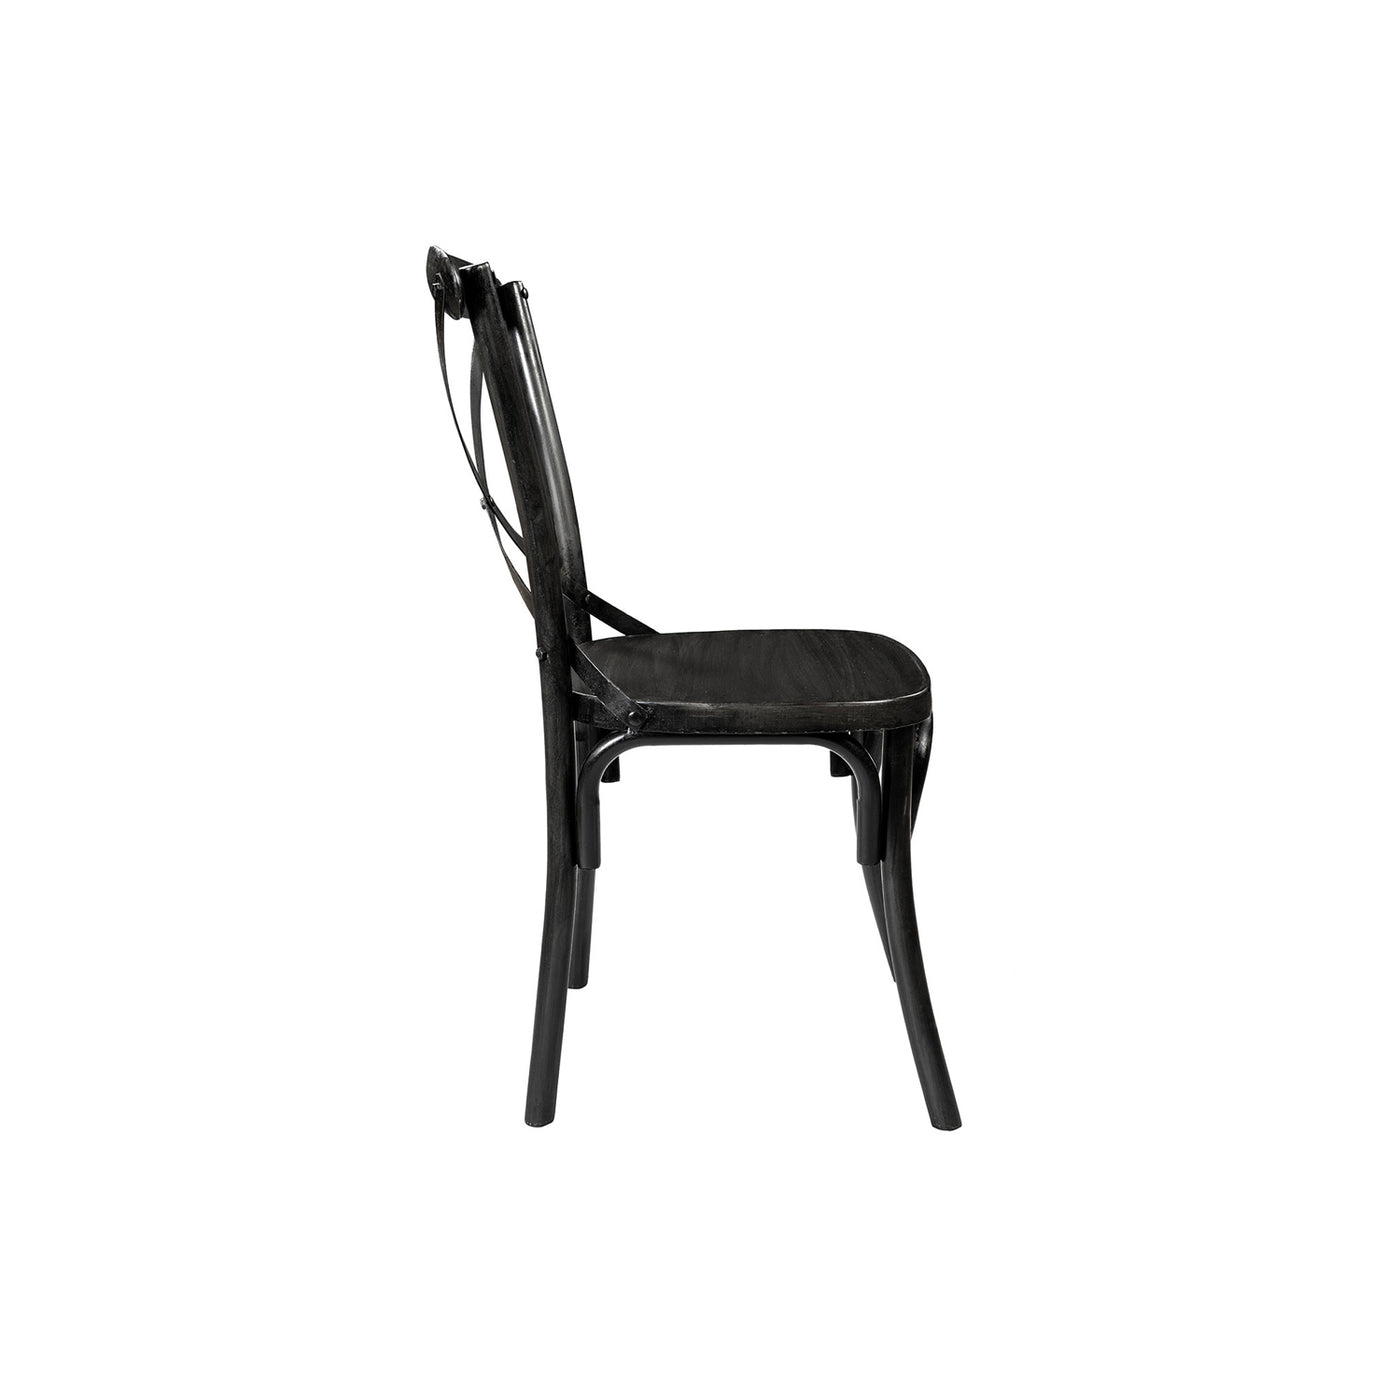 Industrial Dining Chair (Style II)—Distressed Metal in Black